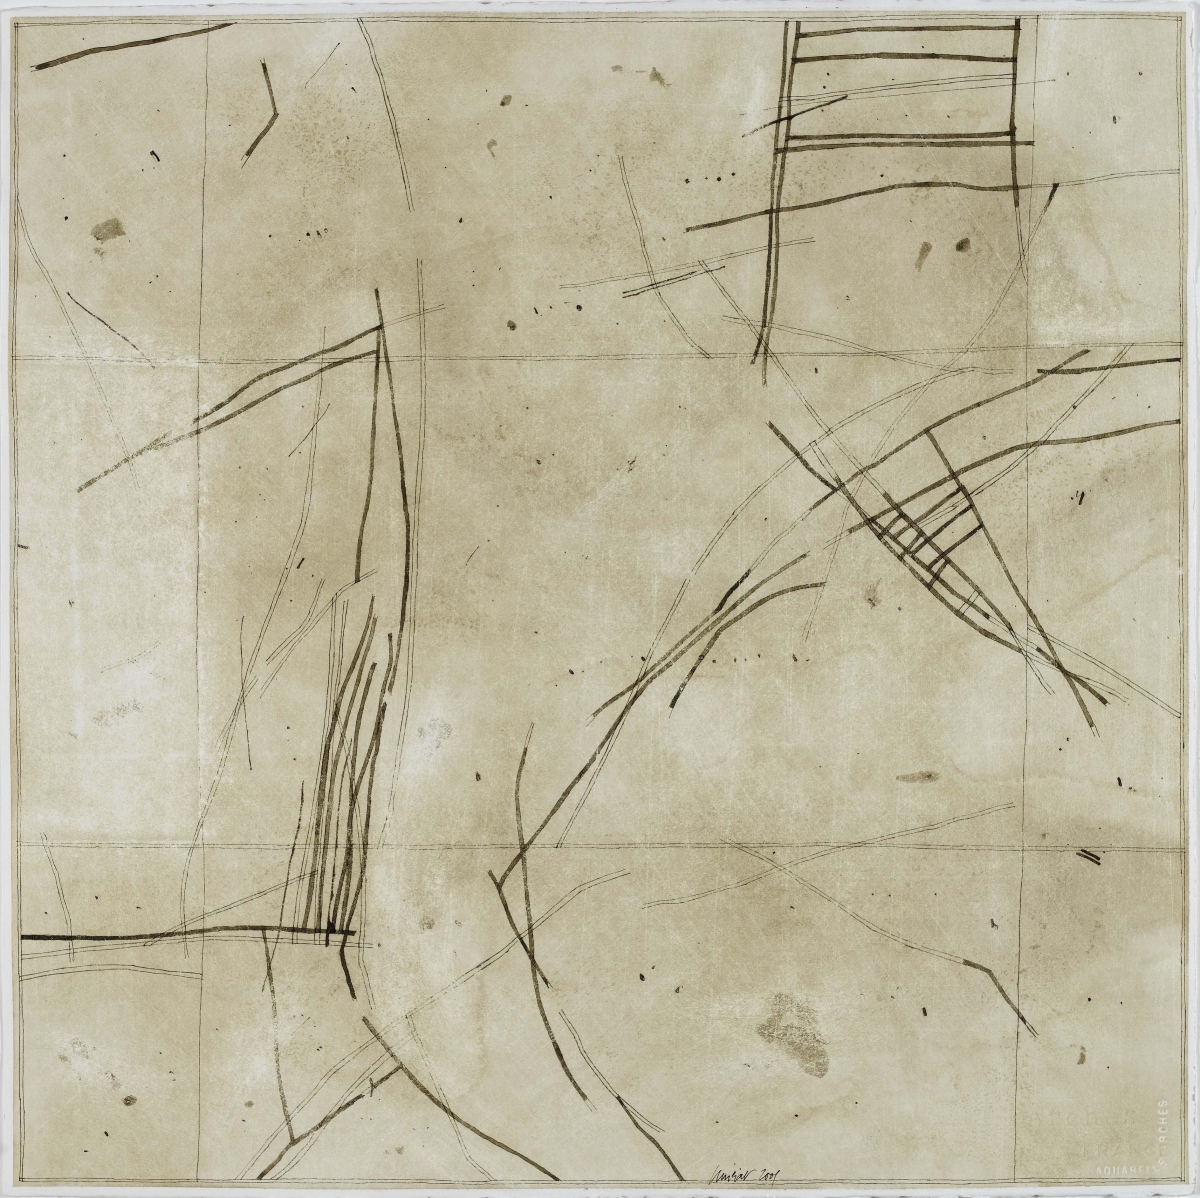 Amorgos, 2007, Ink on paper, 58x58cm